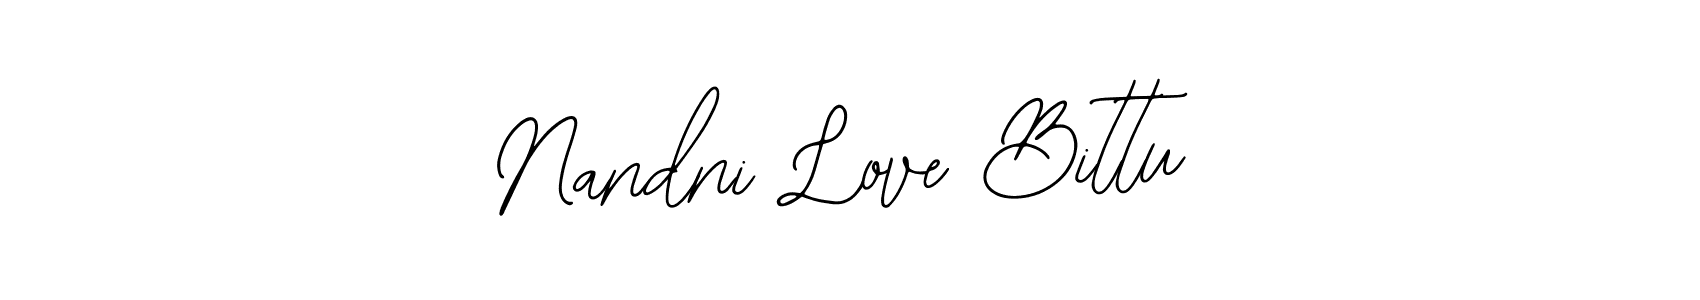 Make a beautiful signature design for name Nandni Love Bittu. Use this online signature maker to create a handwritten signature for free. Nandni Love Bittu signature style 12 images and pictures png